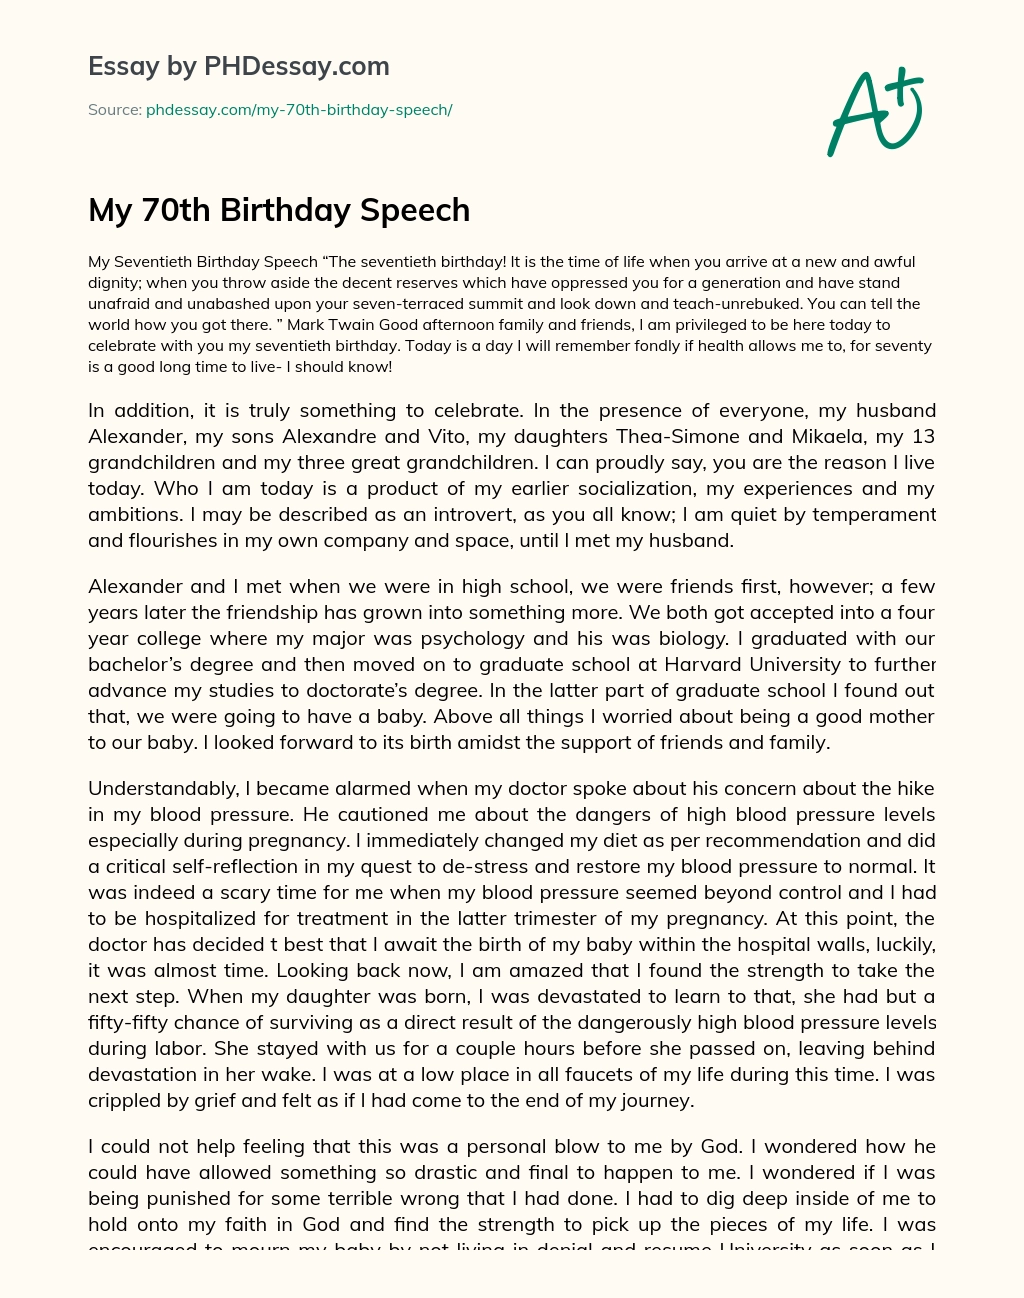 My 70th Birthday Speech essay